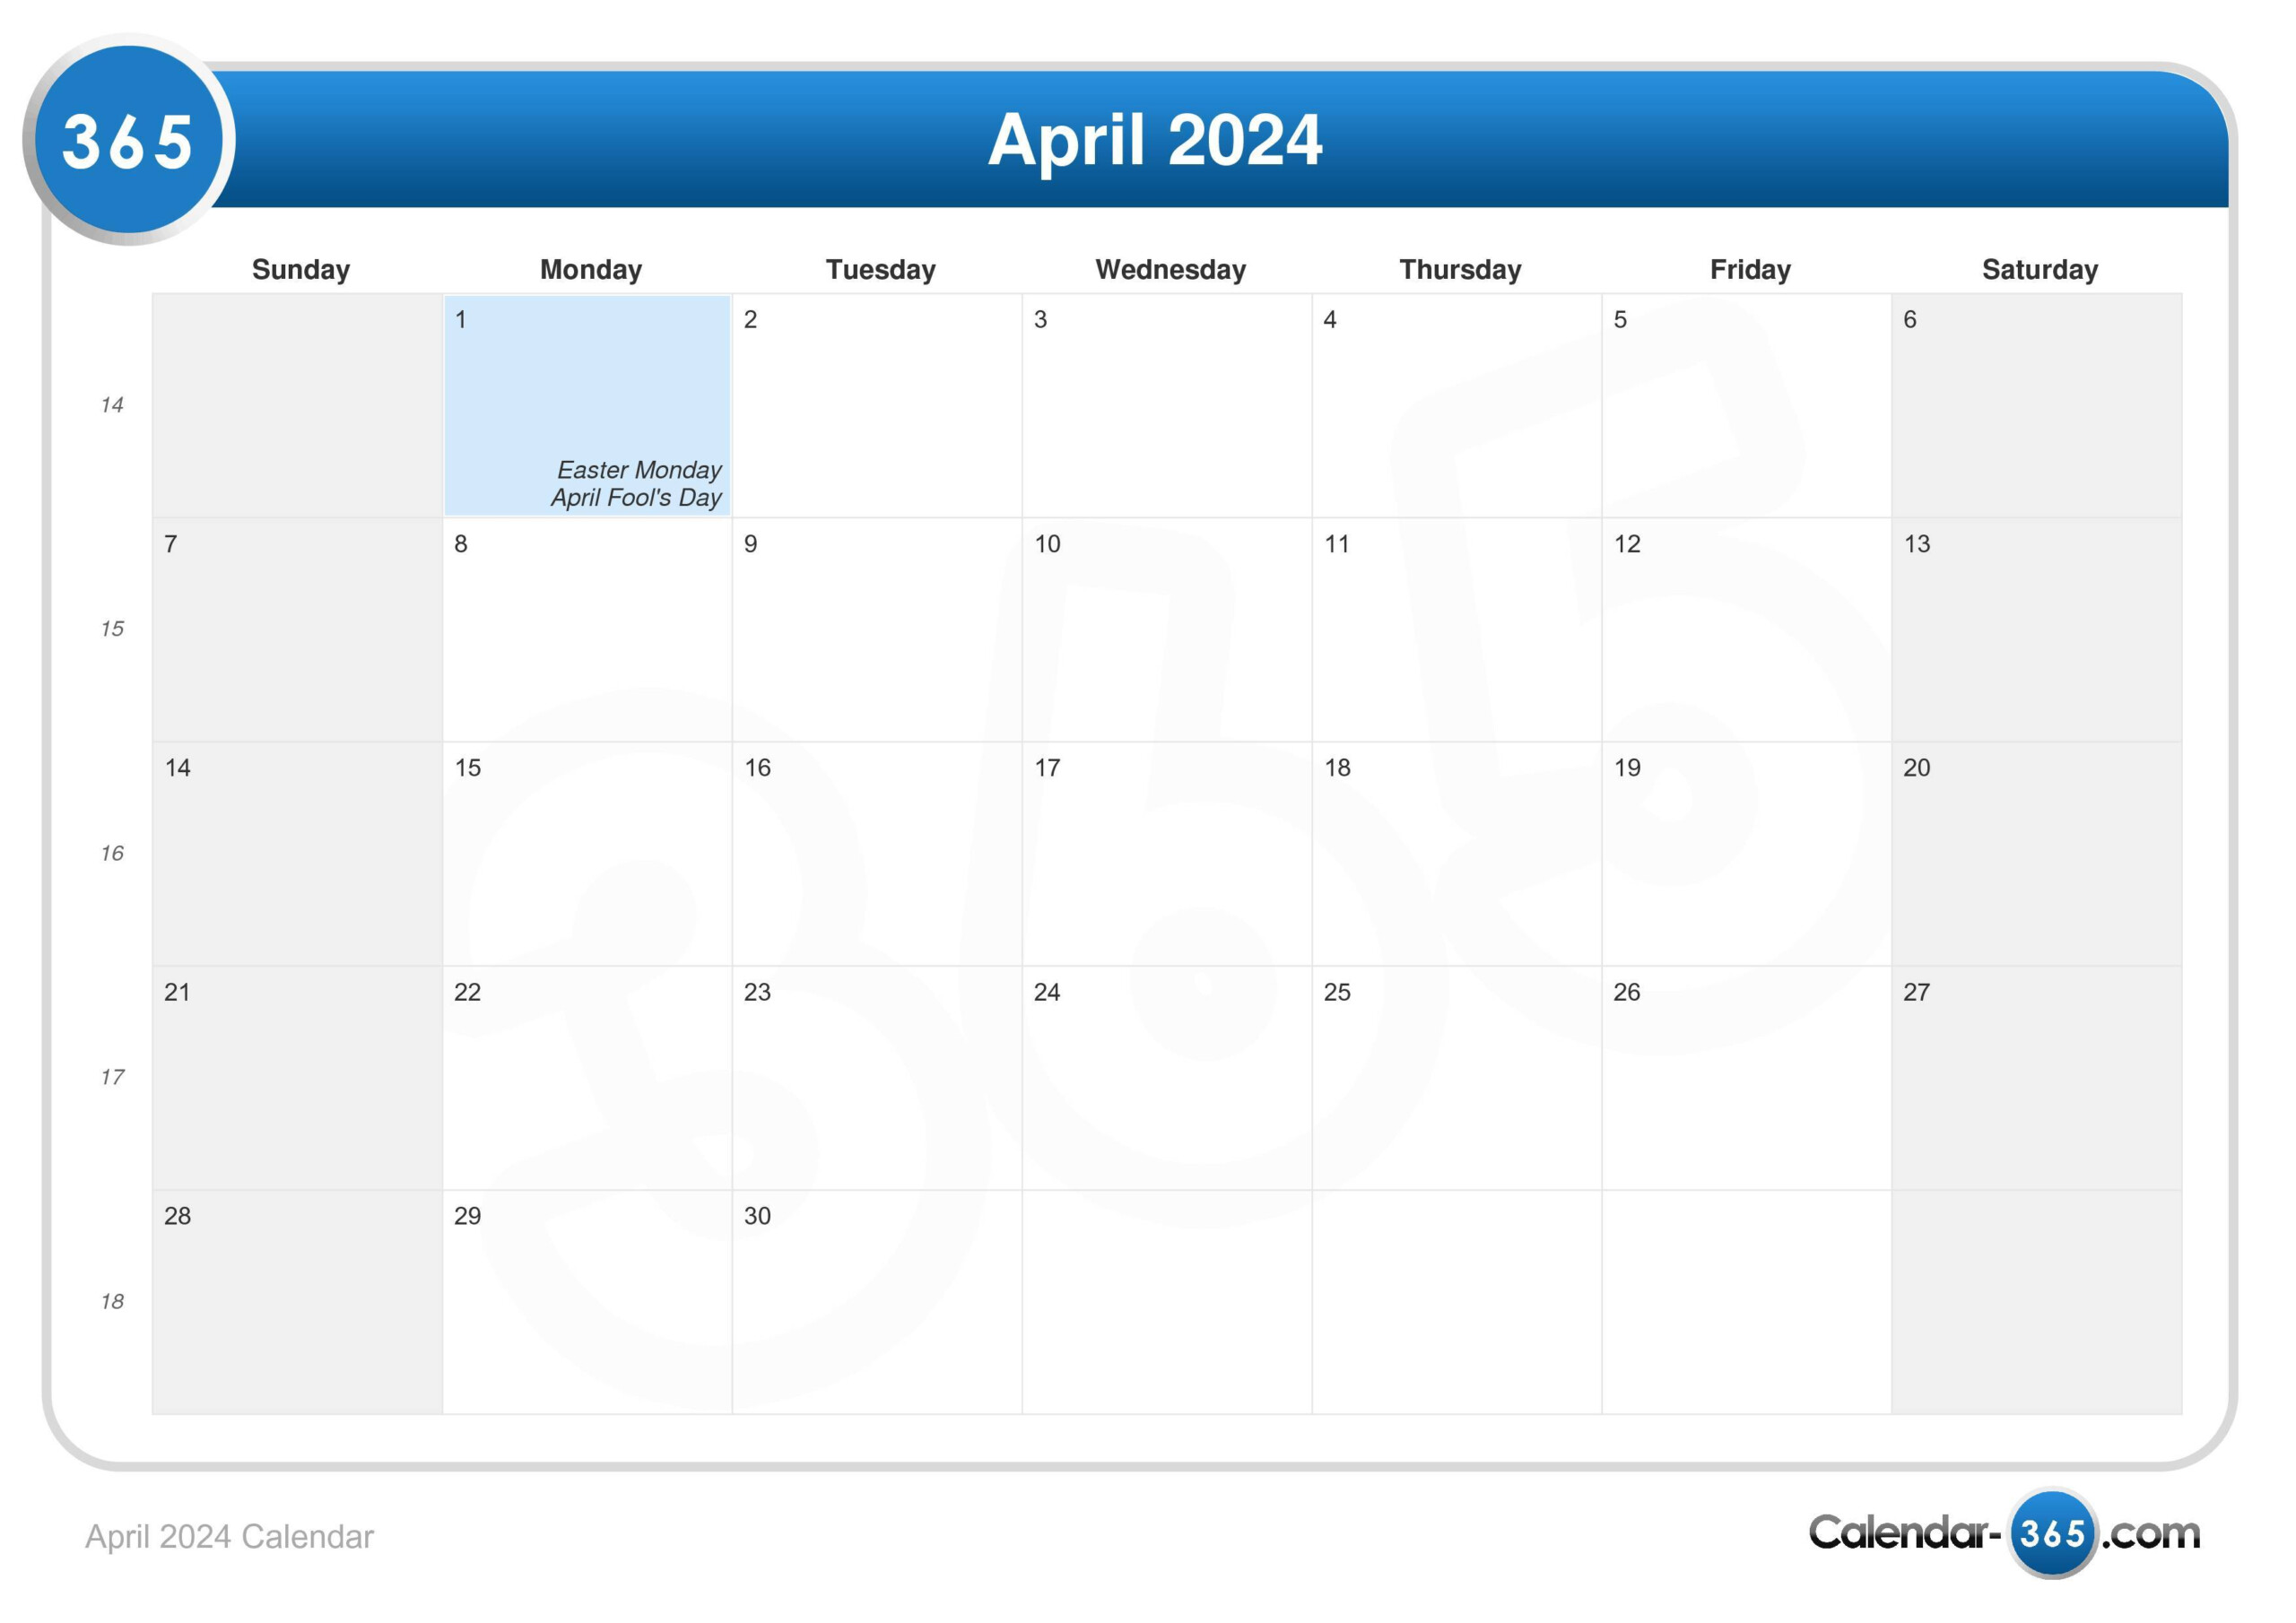 April 8th 2024 Jewish Calendar 2024 Calendar Printable